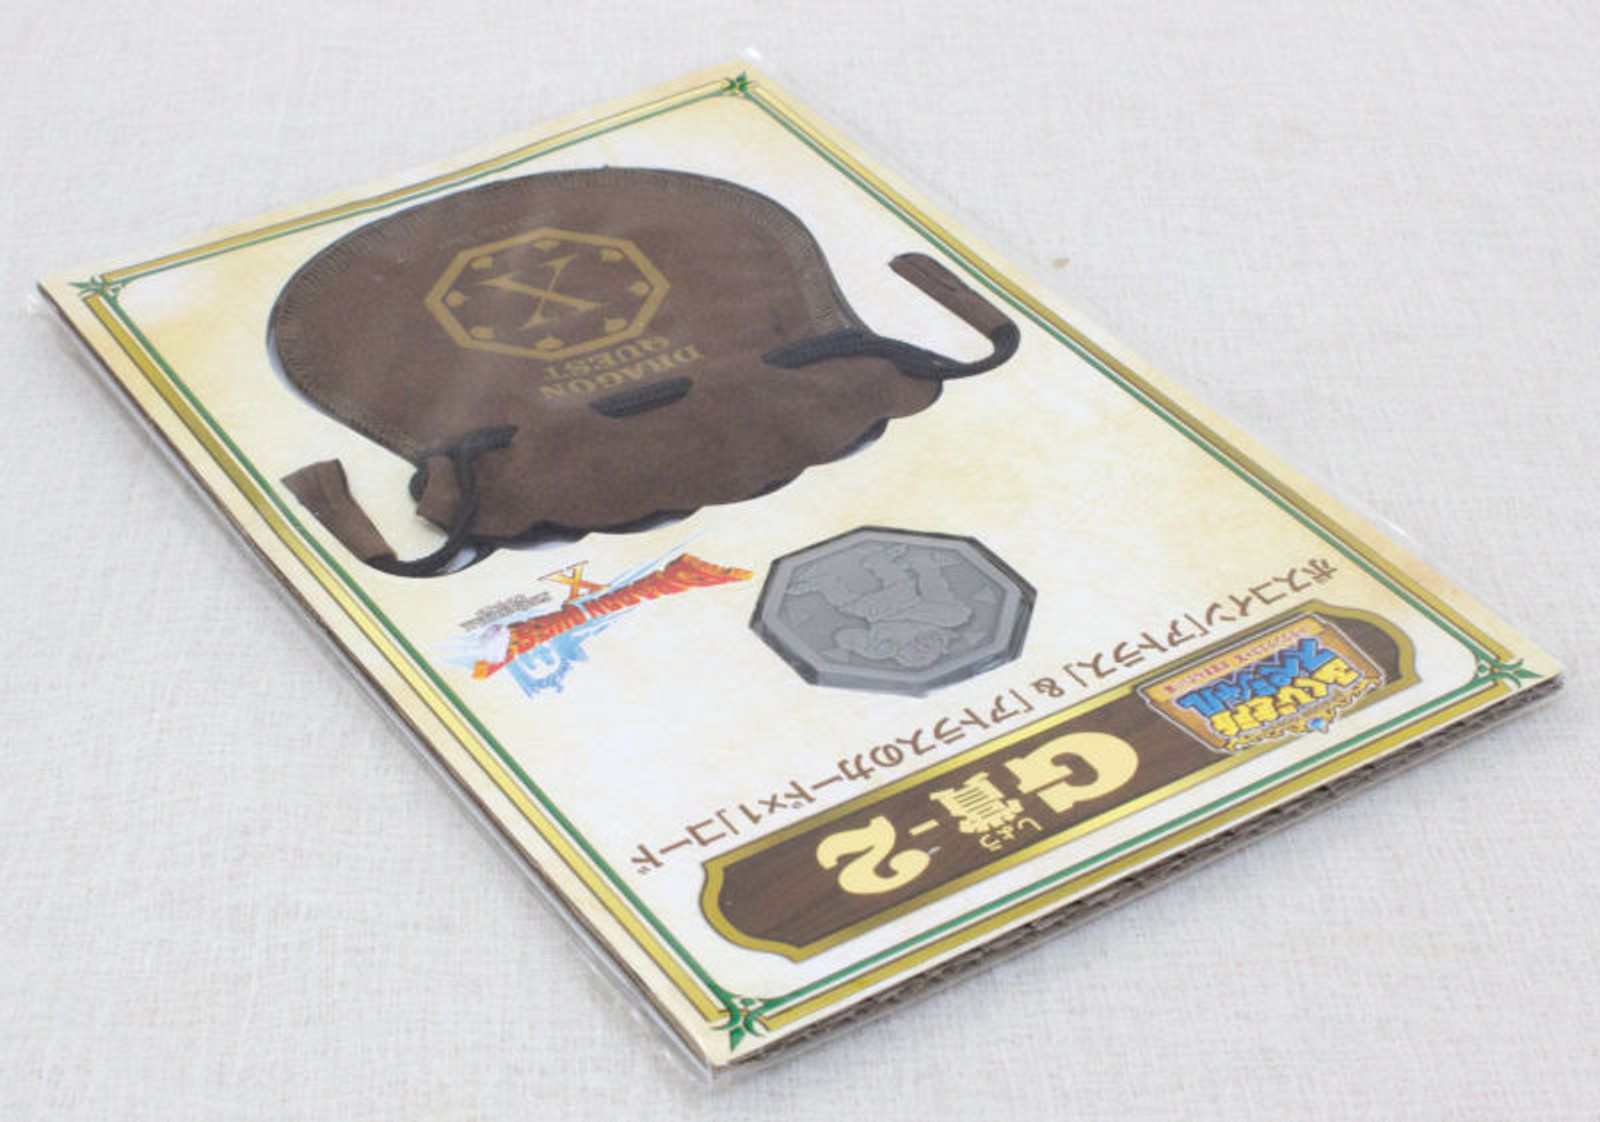 Dragon Quest Boss Coin Atlas +Drawstring Bag SQUARE ENIX JAPAN